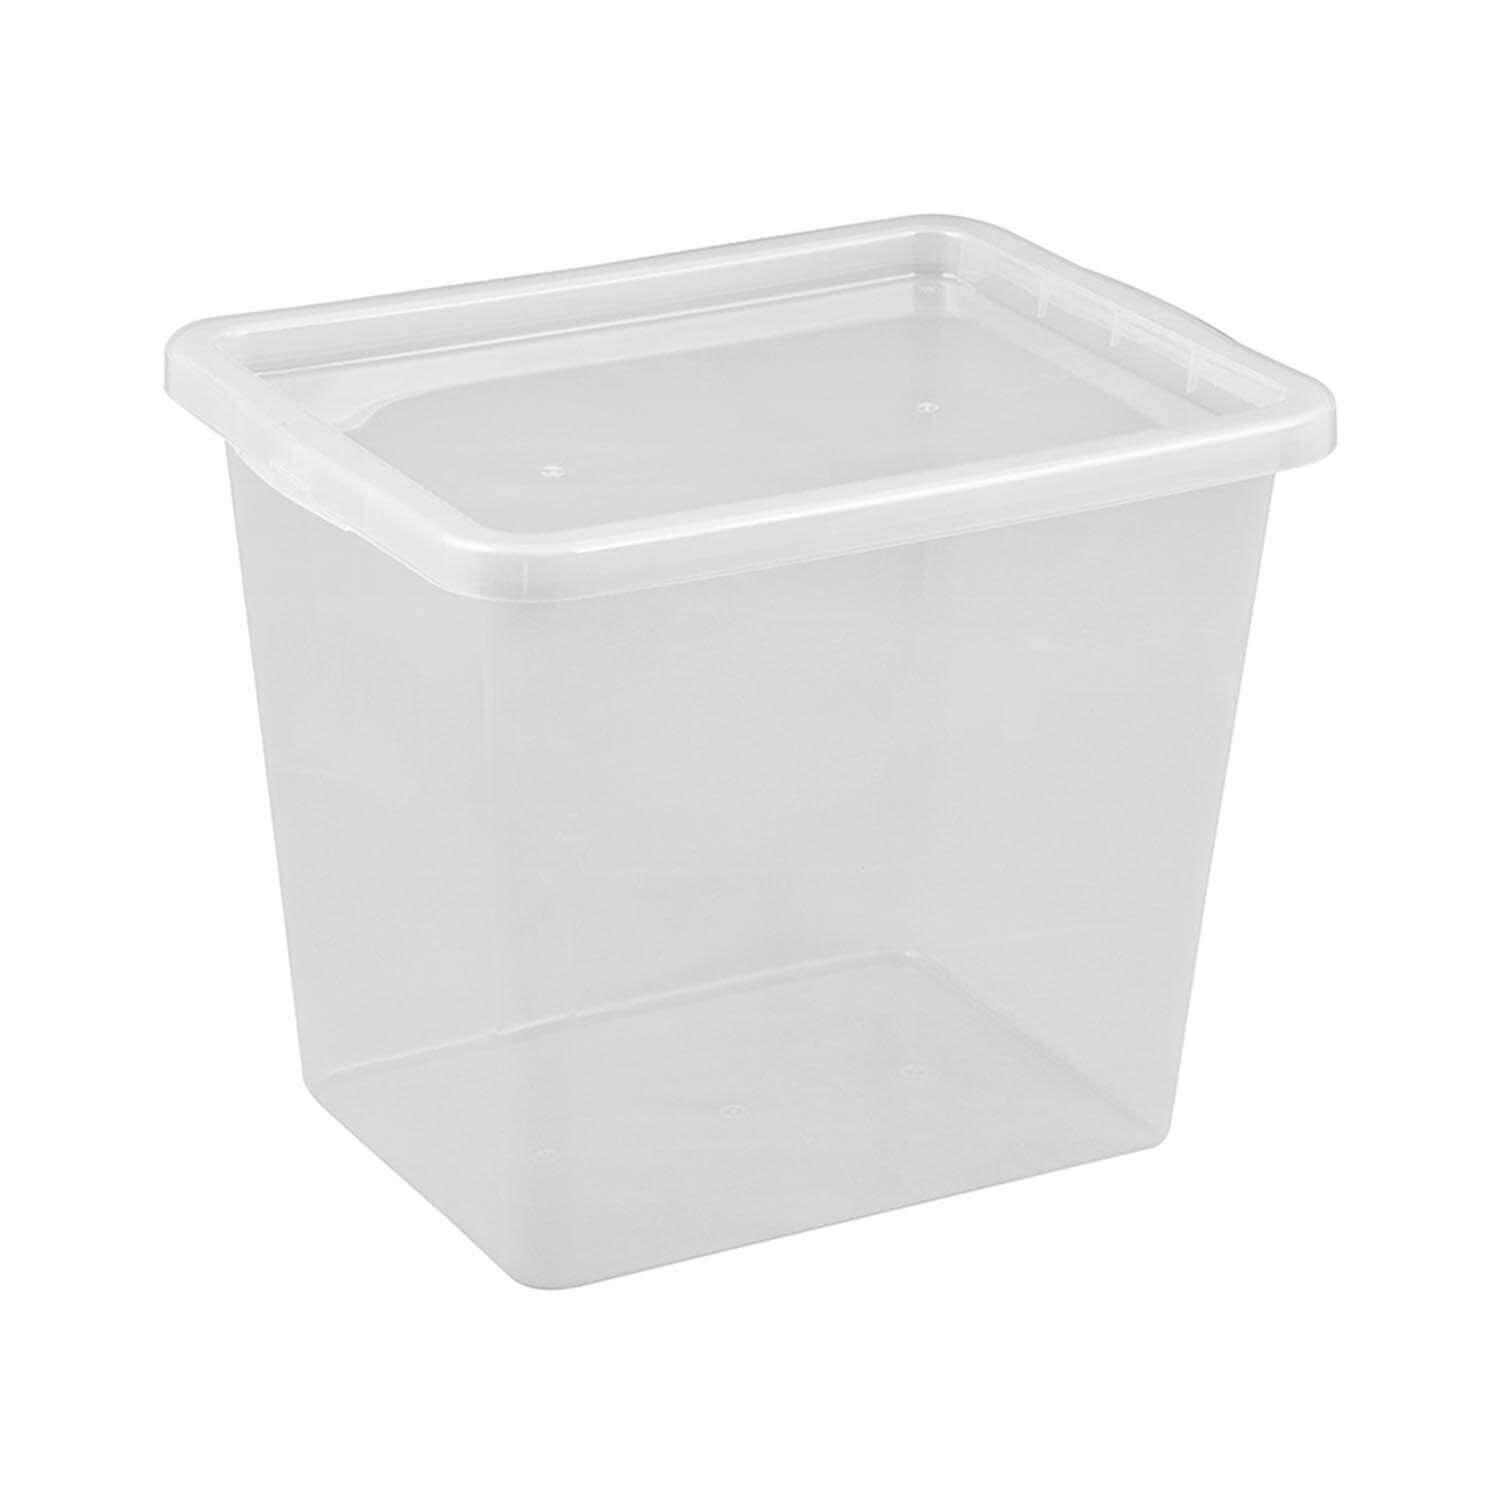 Aufbewahrungsbox "Basic Box" 31 L transparent, stapelbar, Kunststoffbox